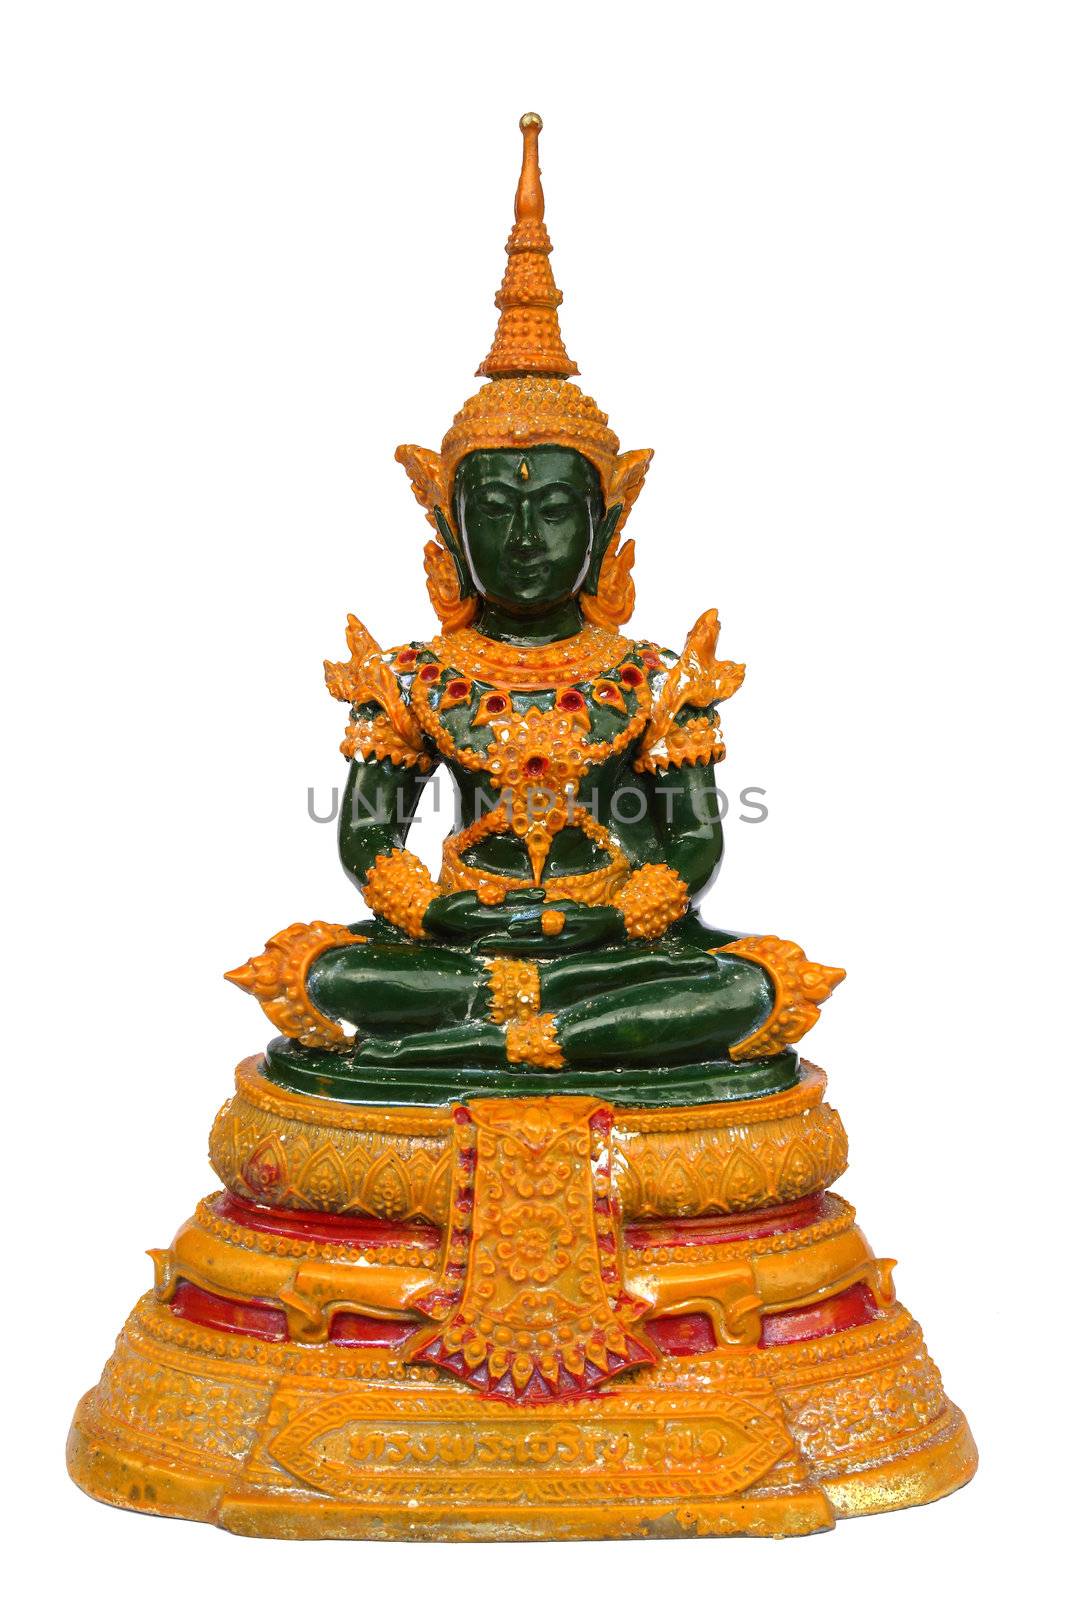 Emeral buddha of Thailand